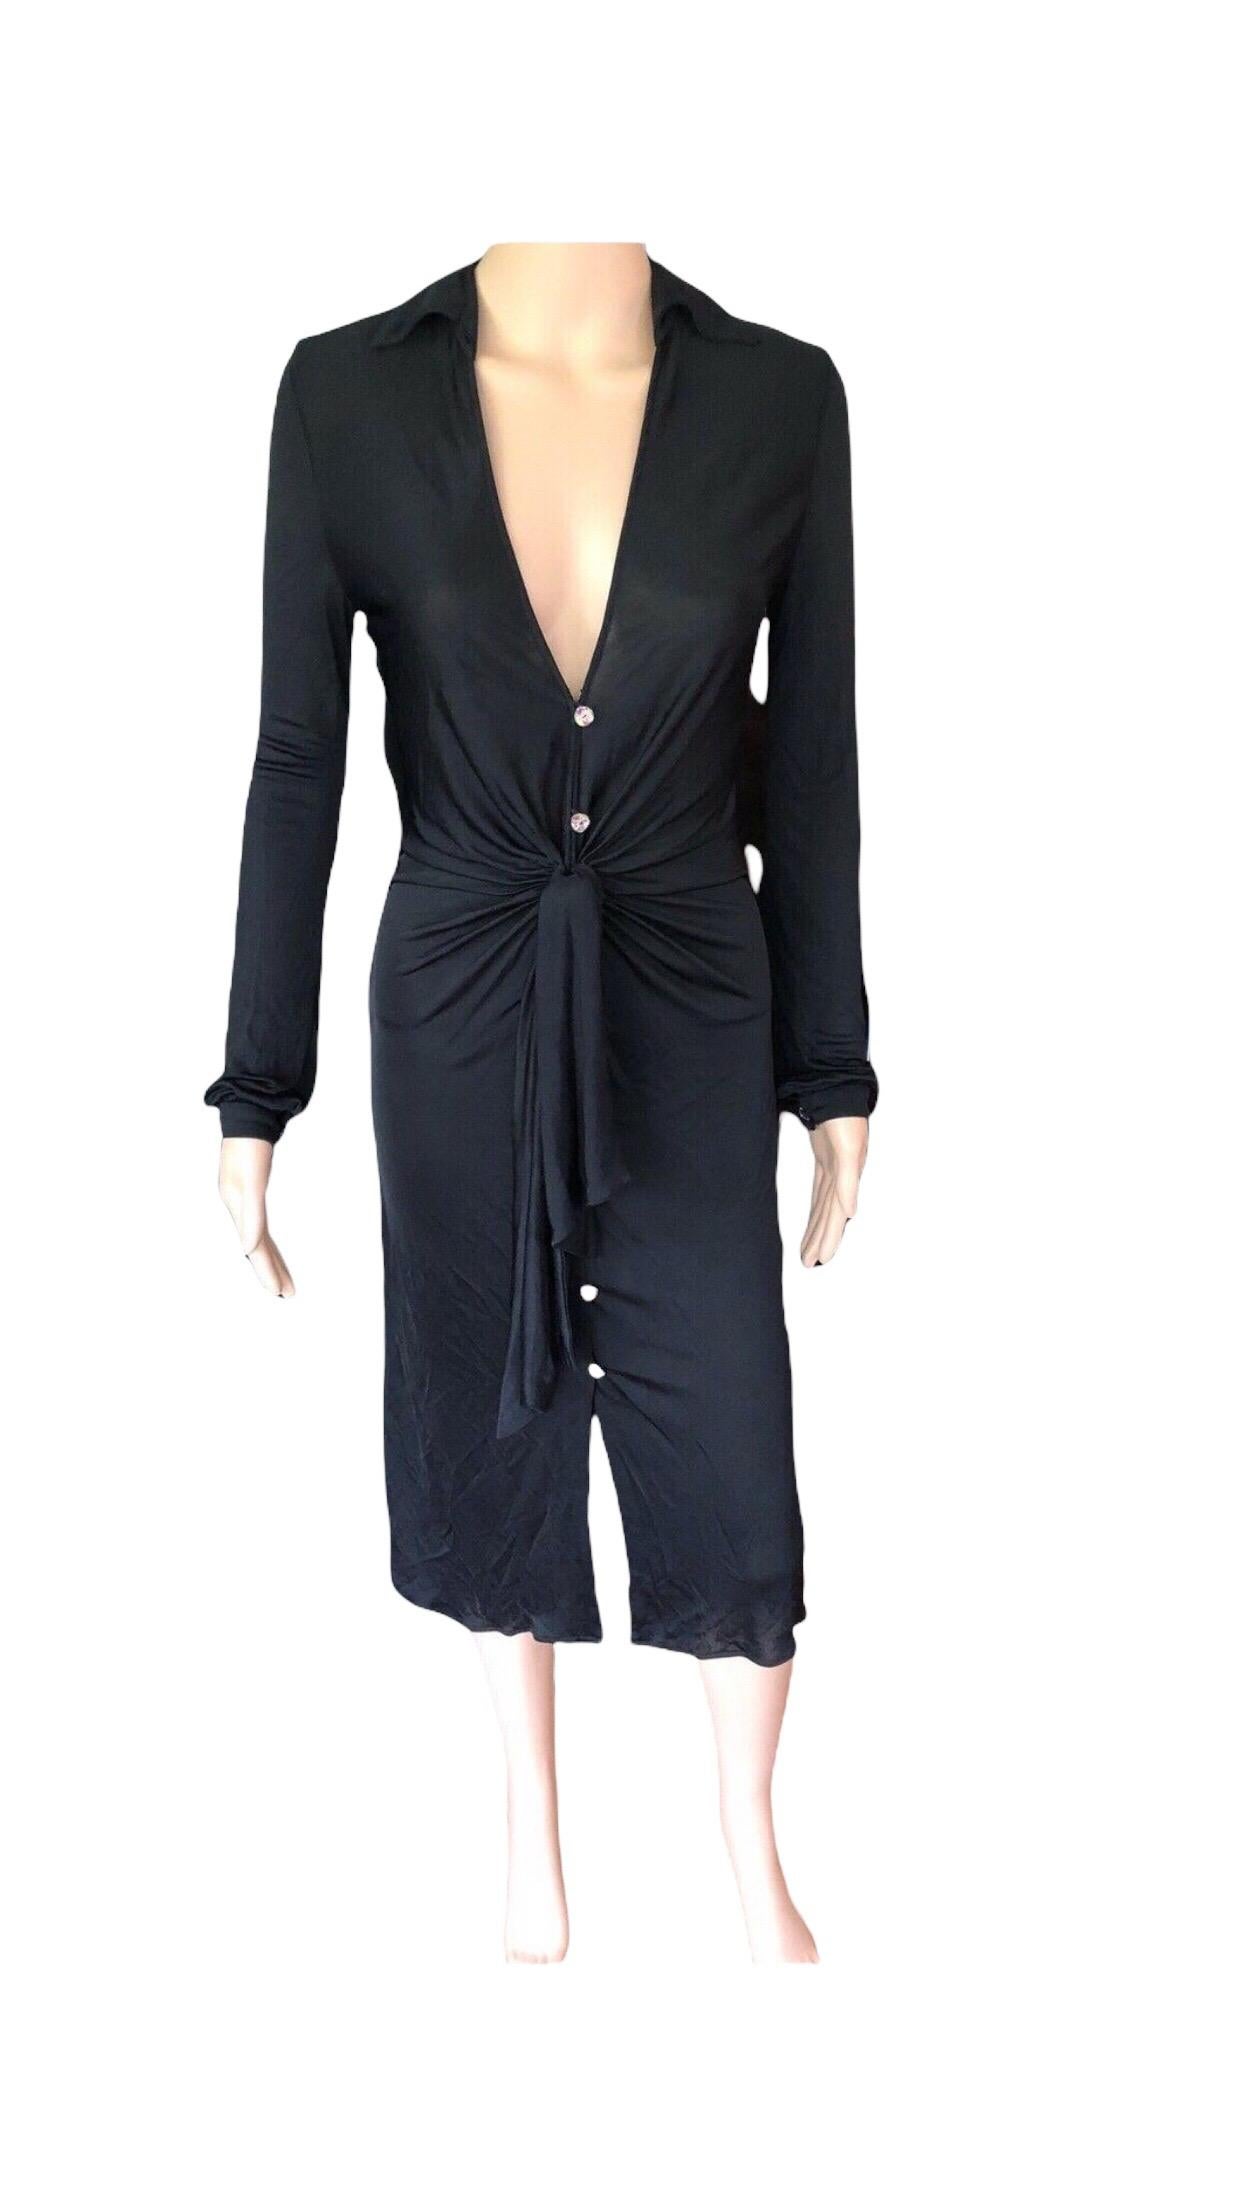 Gianni Versace S/S 2000 Runway Vintage Plunging Neckline Black Dress  For Sale 5